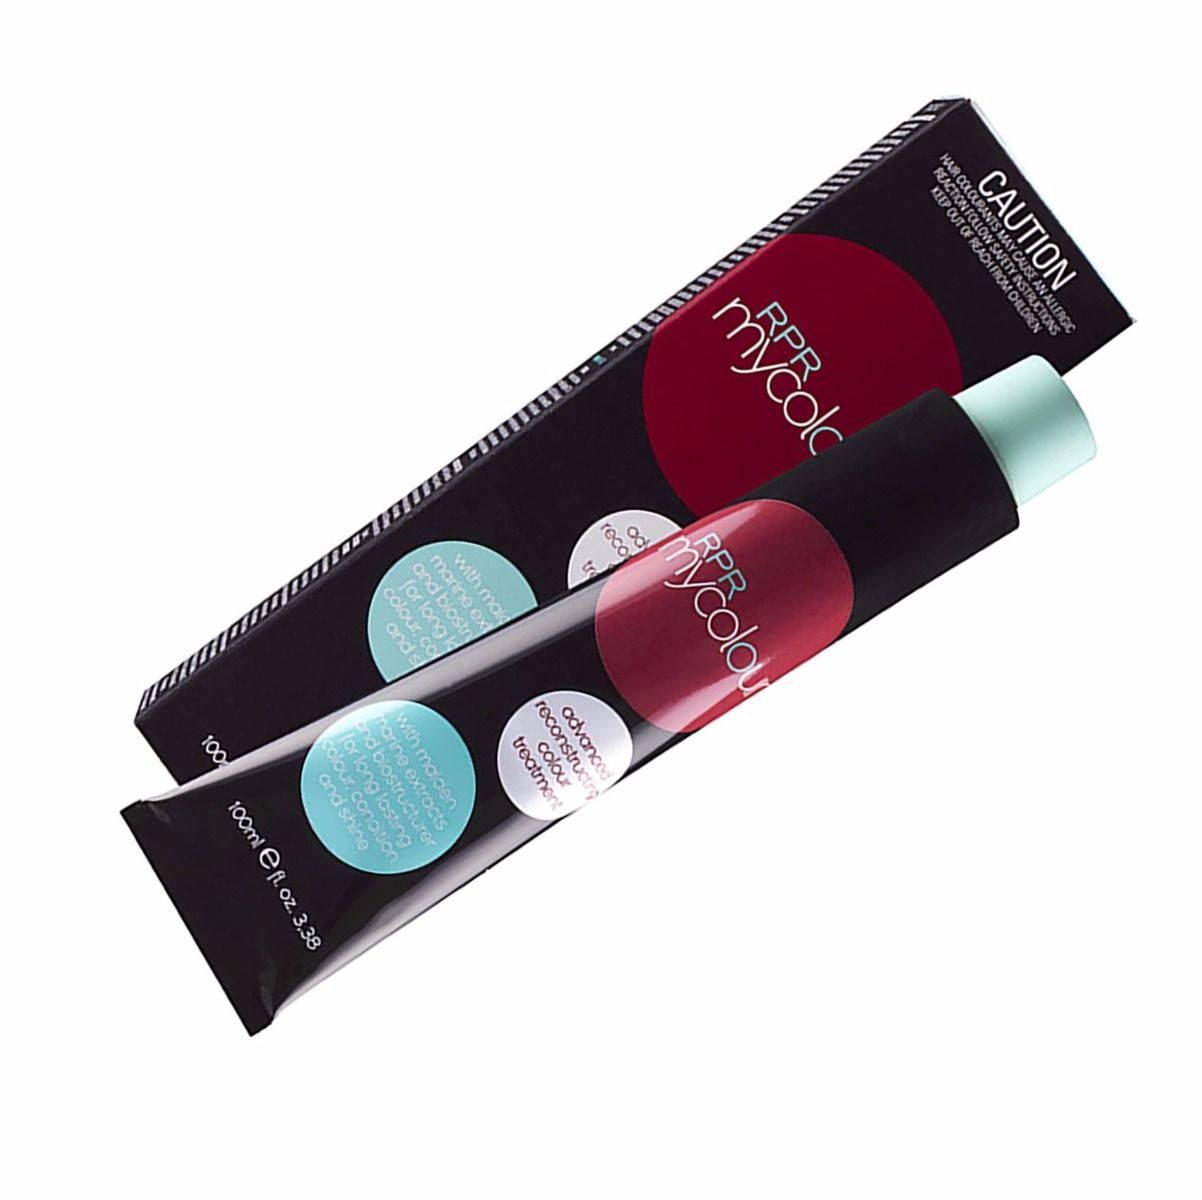 RPR My Colour 9.12 Level 9 Ash Violet 100g tube Mix 1:1.5 - On Line Hair Depot